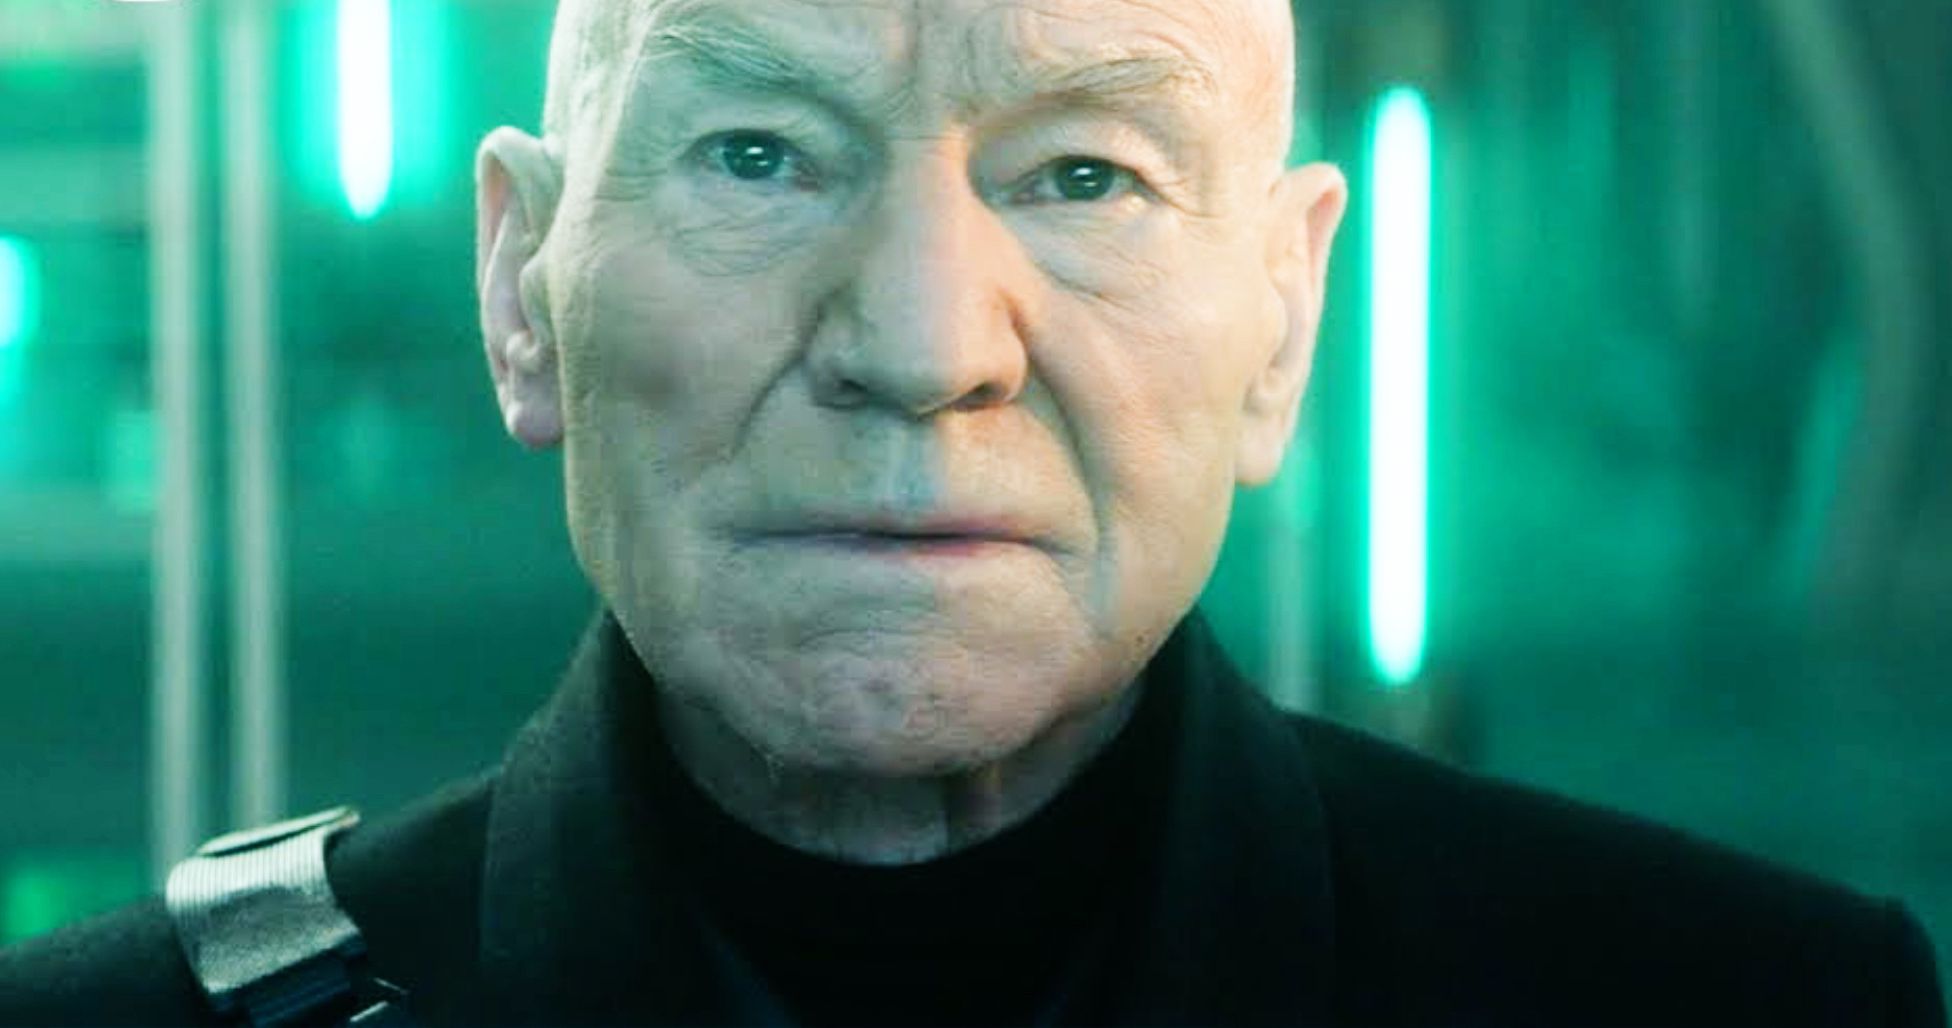 Star Trek: Picard Season 2 Trailer Announces Release Date, Season 3 Renewal Is Confirmed